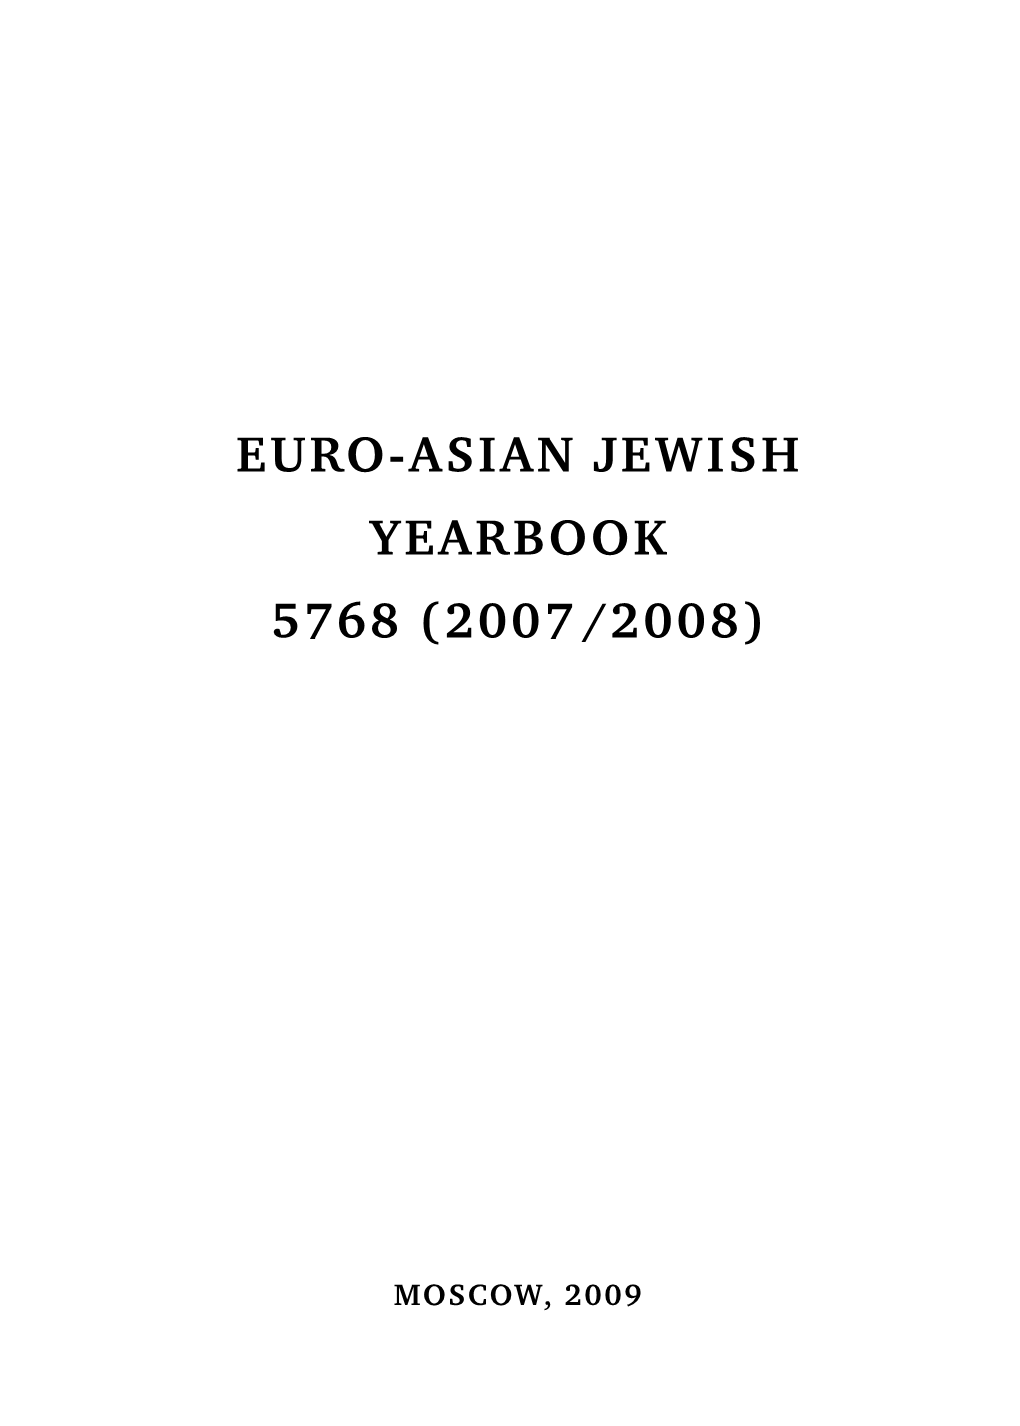 Euro-Asian Jewish Yearbook 5768 (2007/2008)